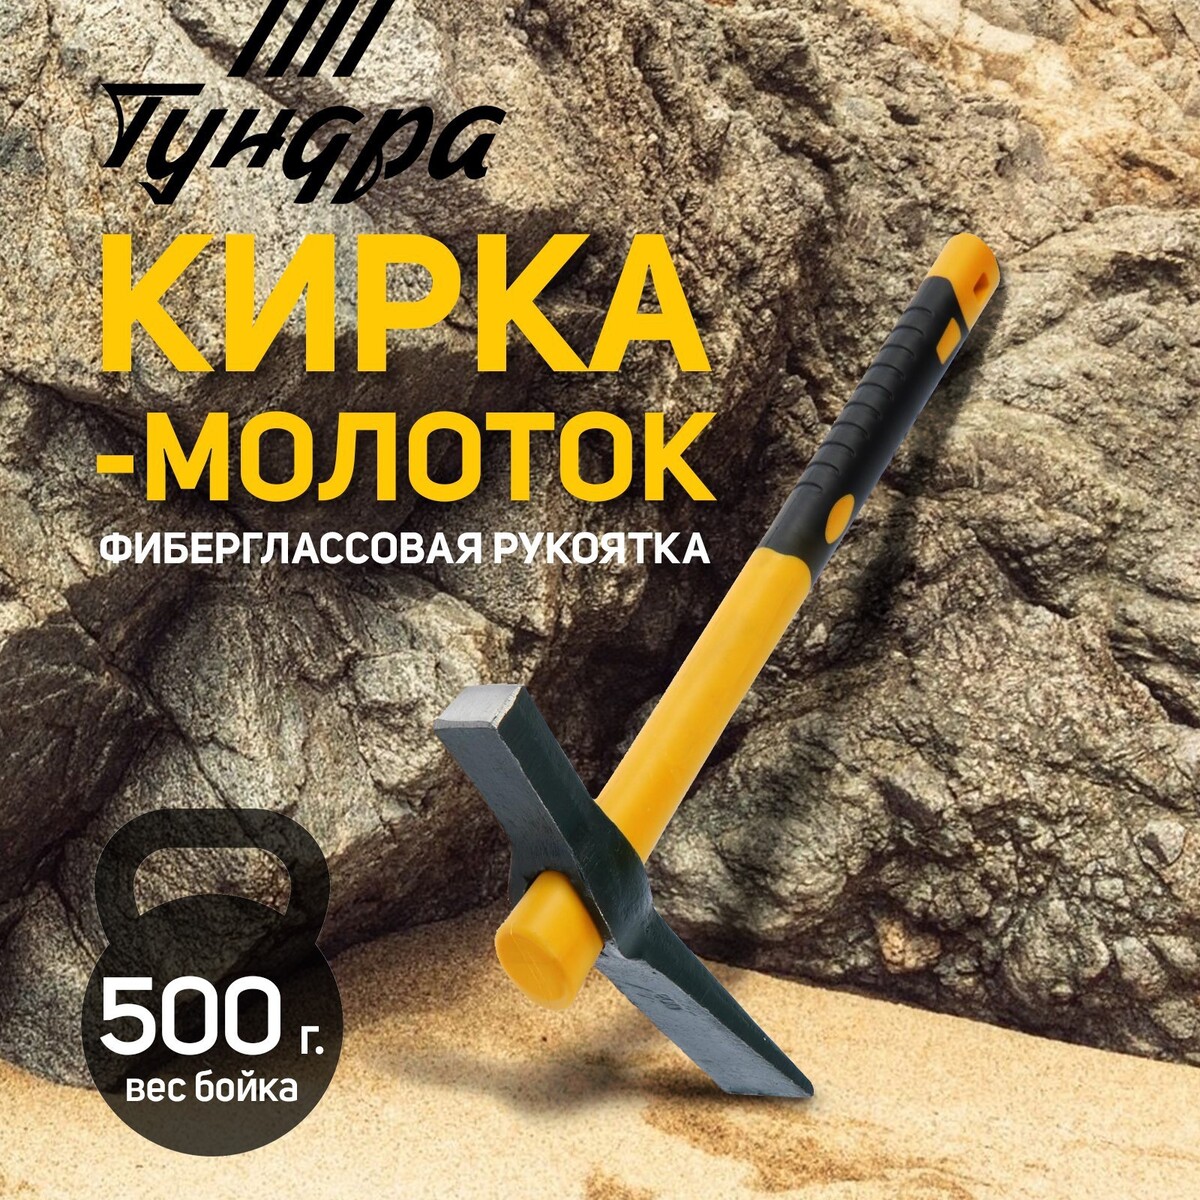 Кирка-молоток тундра, кованая, фиберглассовая рукоятка 380 мм, 500 г